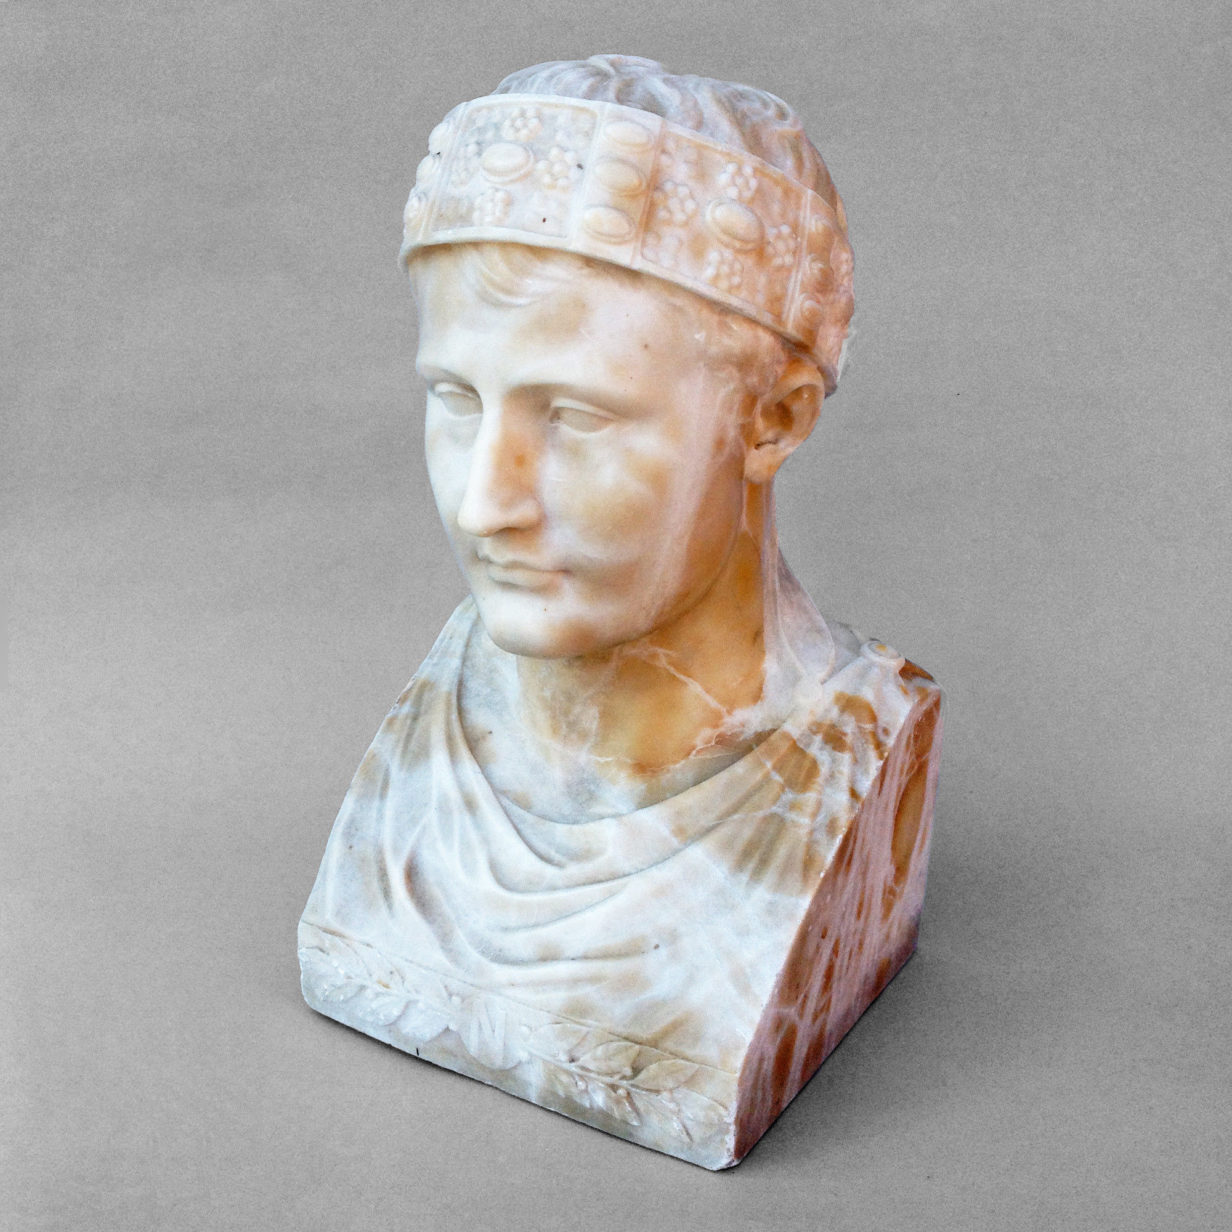 Studio of giovanni battista comolli - an alabaster bust of napoleon